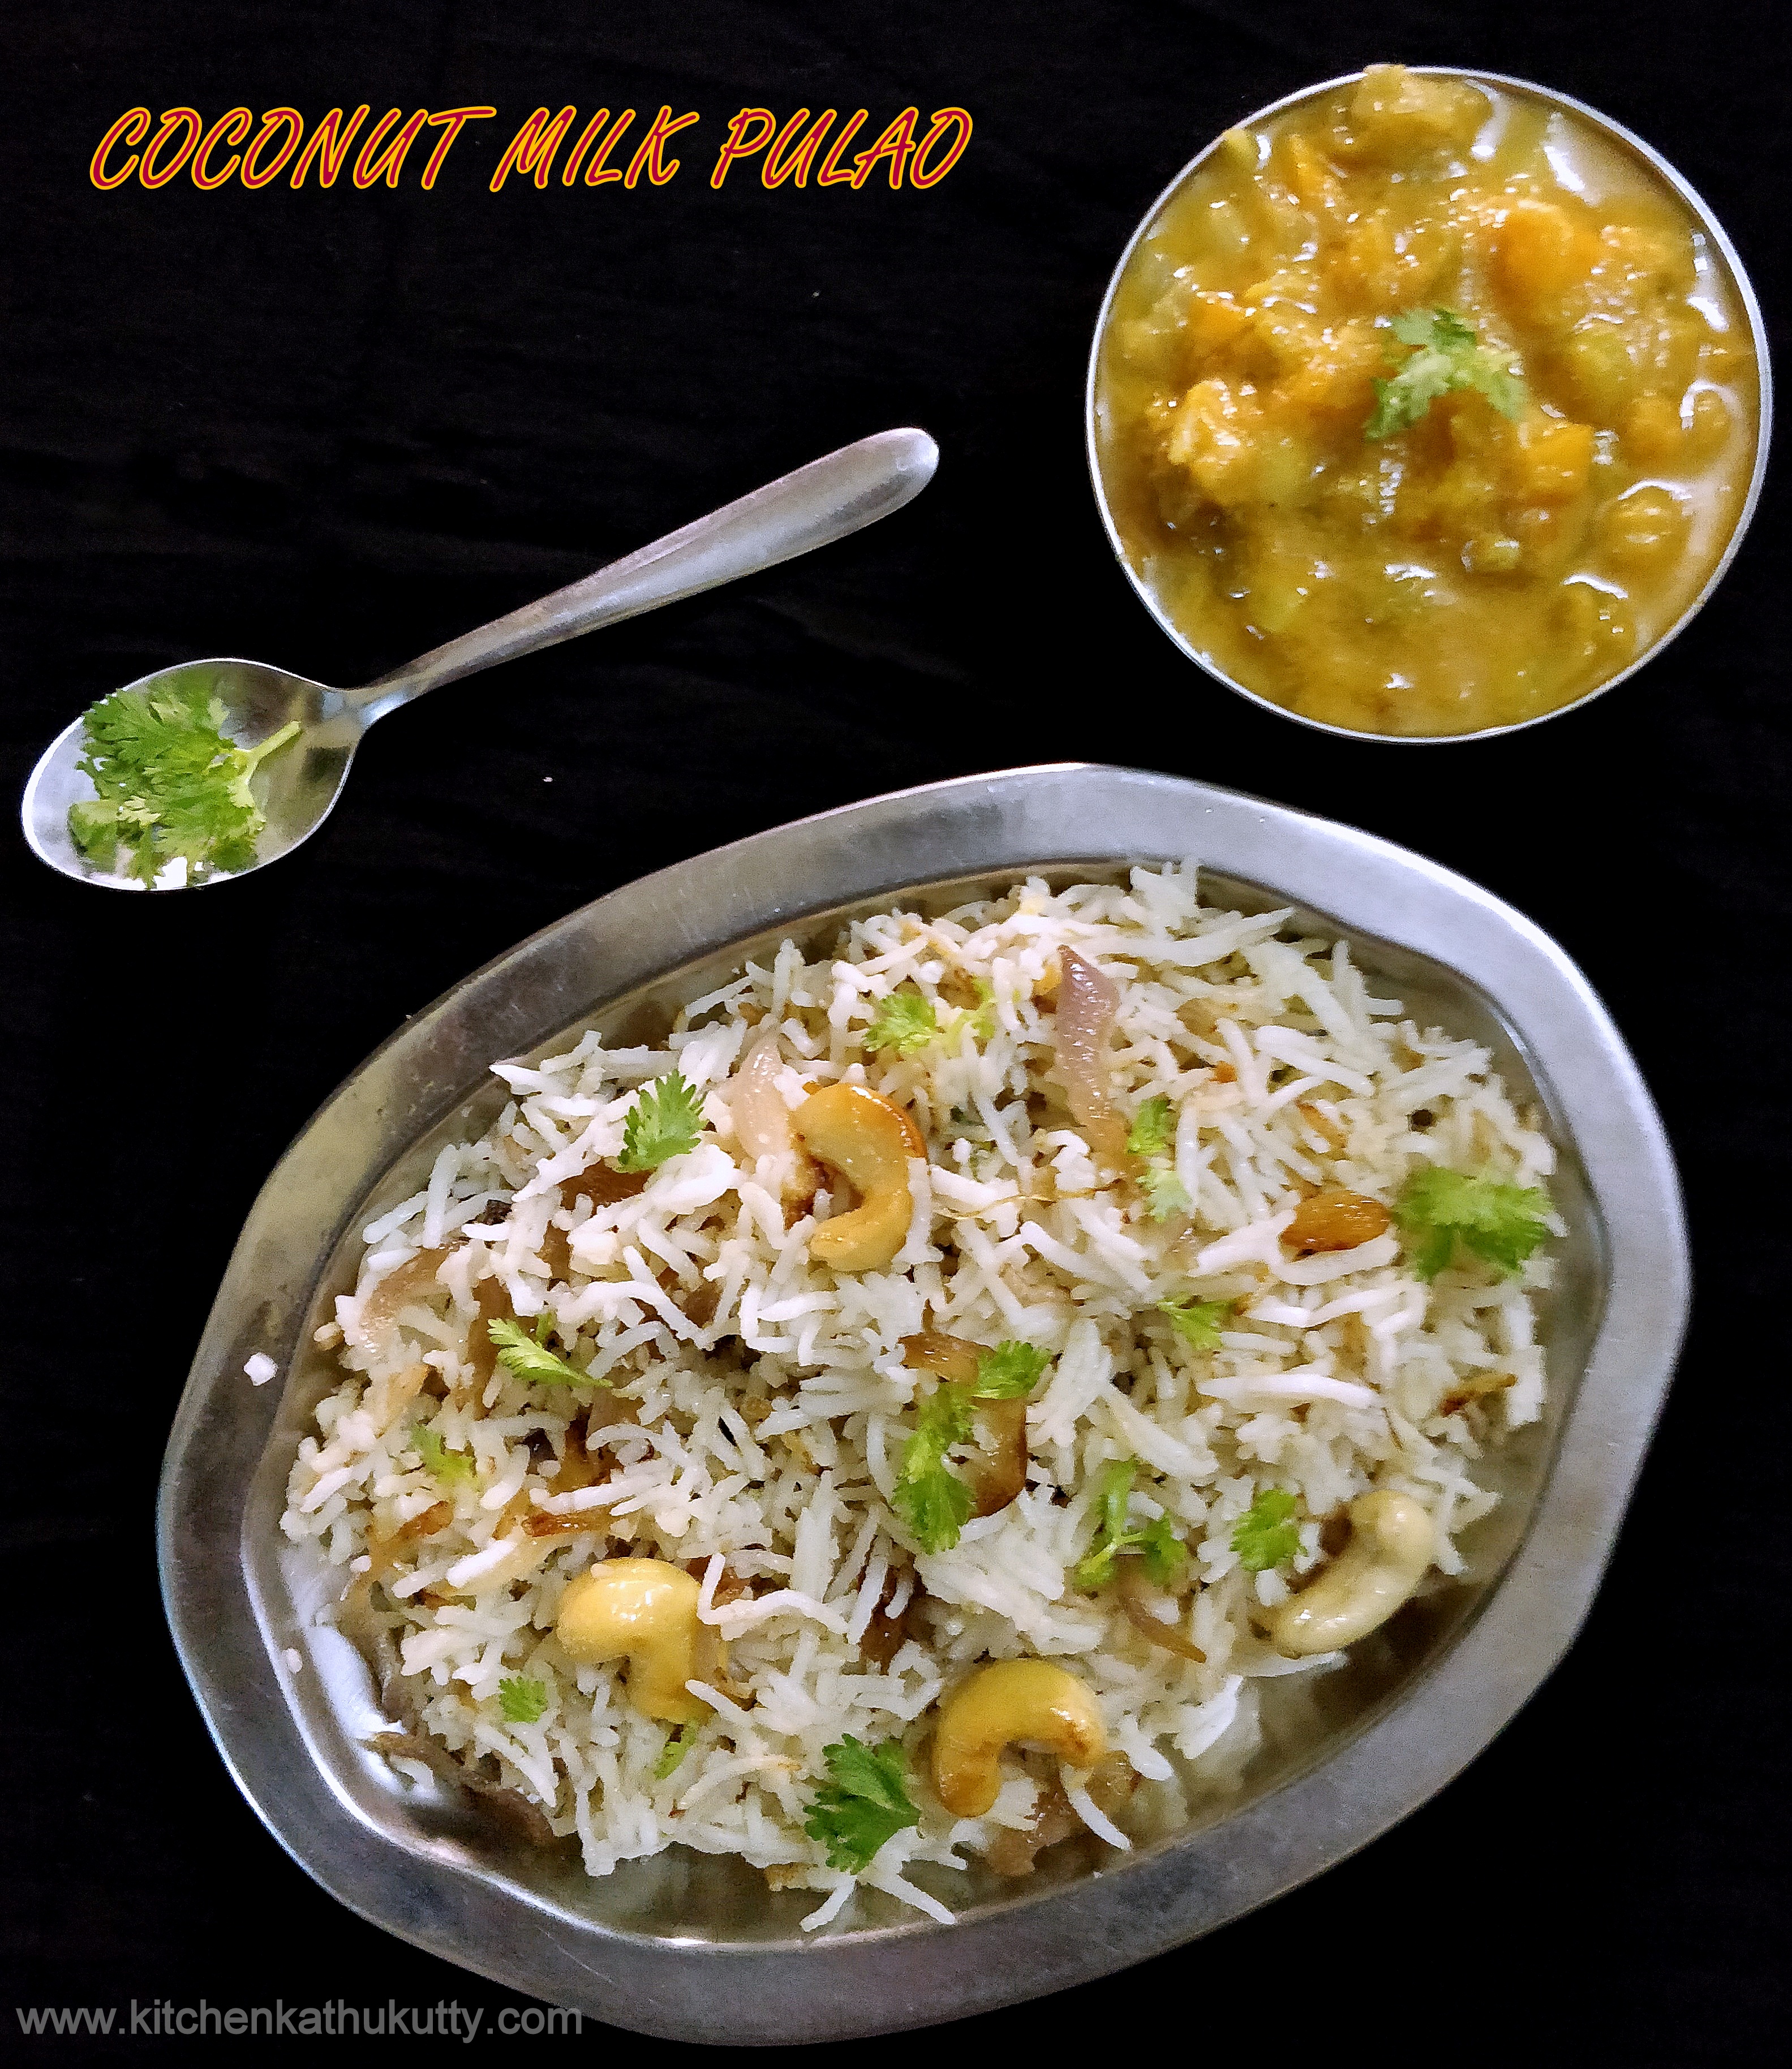 Coconut milk pulao recipe